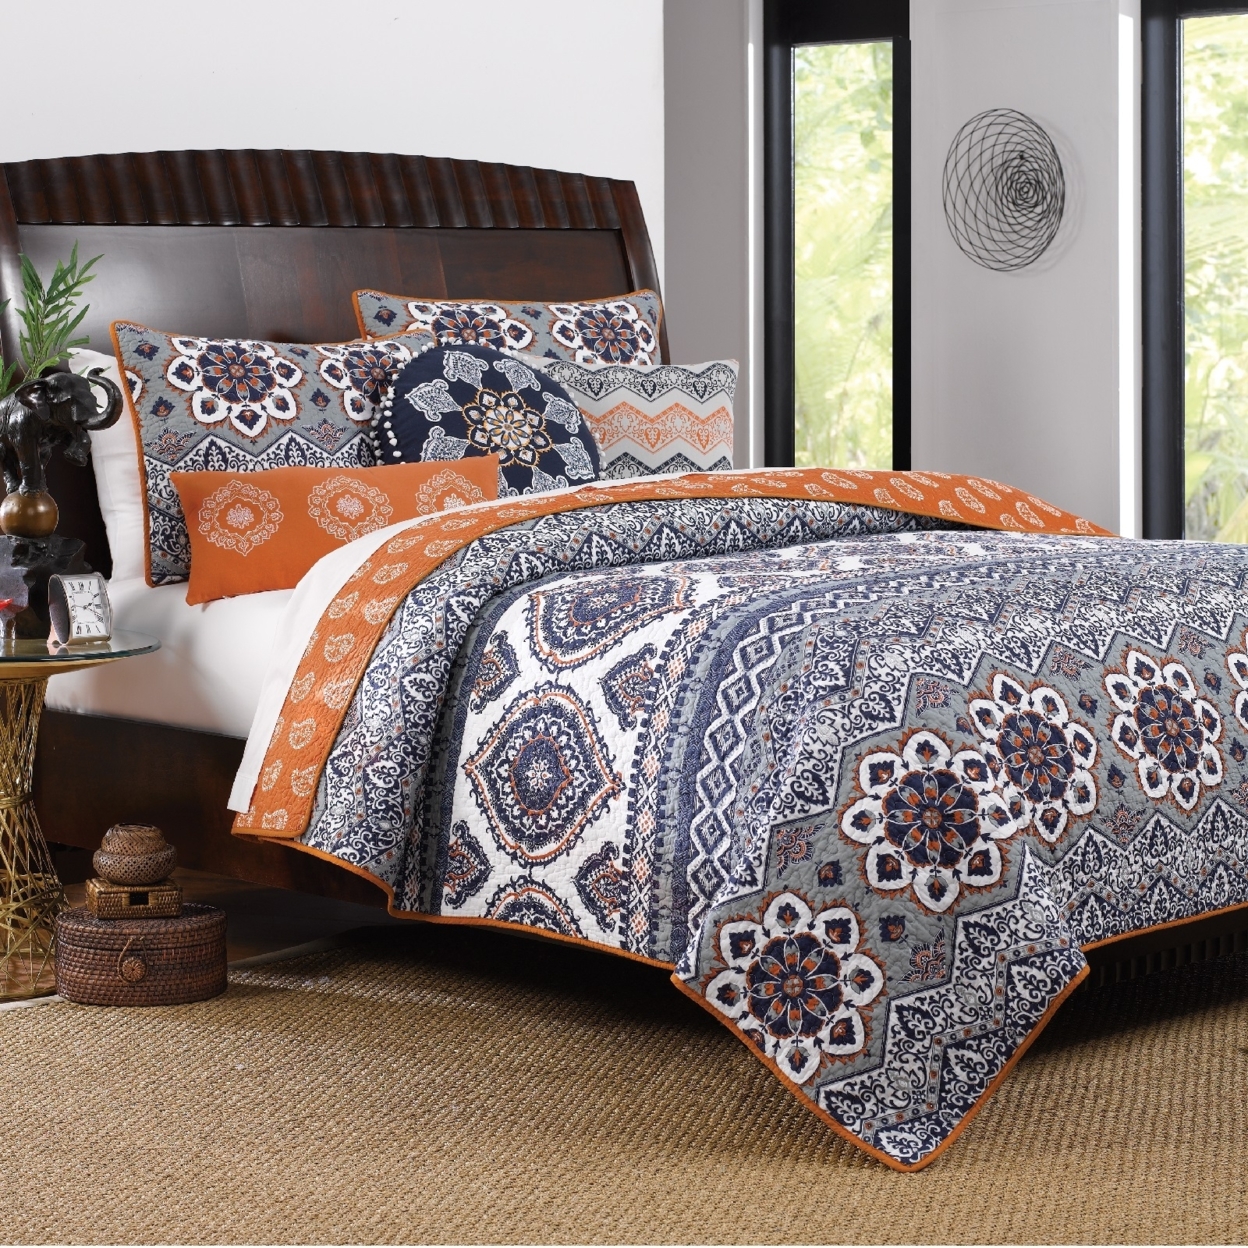 Damask Print Twin Quilt Set With Embroidered Pillows,Indigo Blue And Orange- Saltoro Sherpi